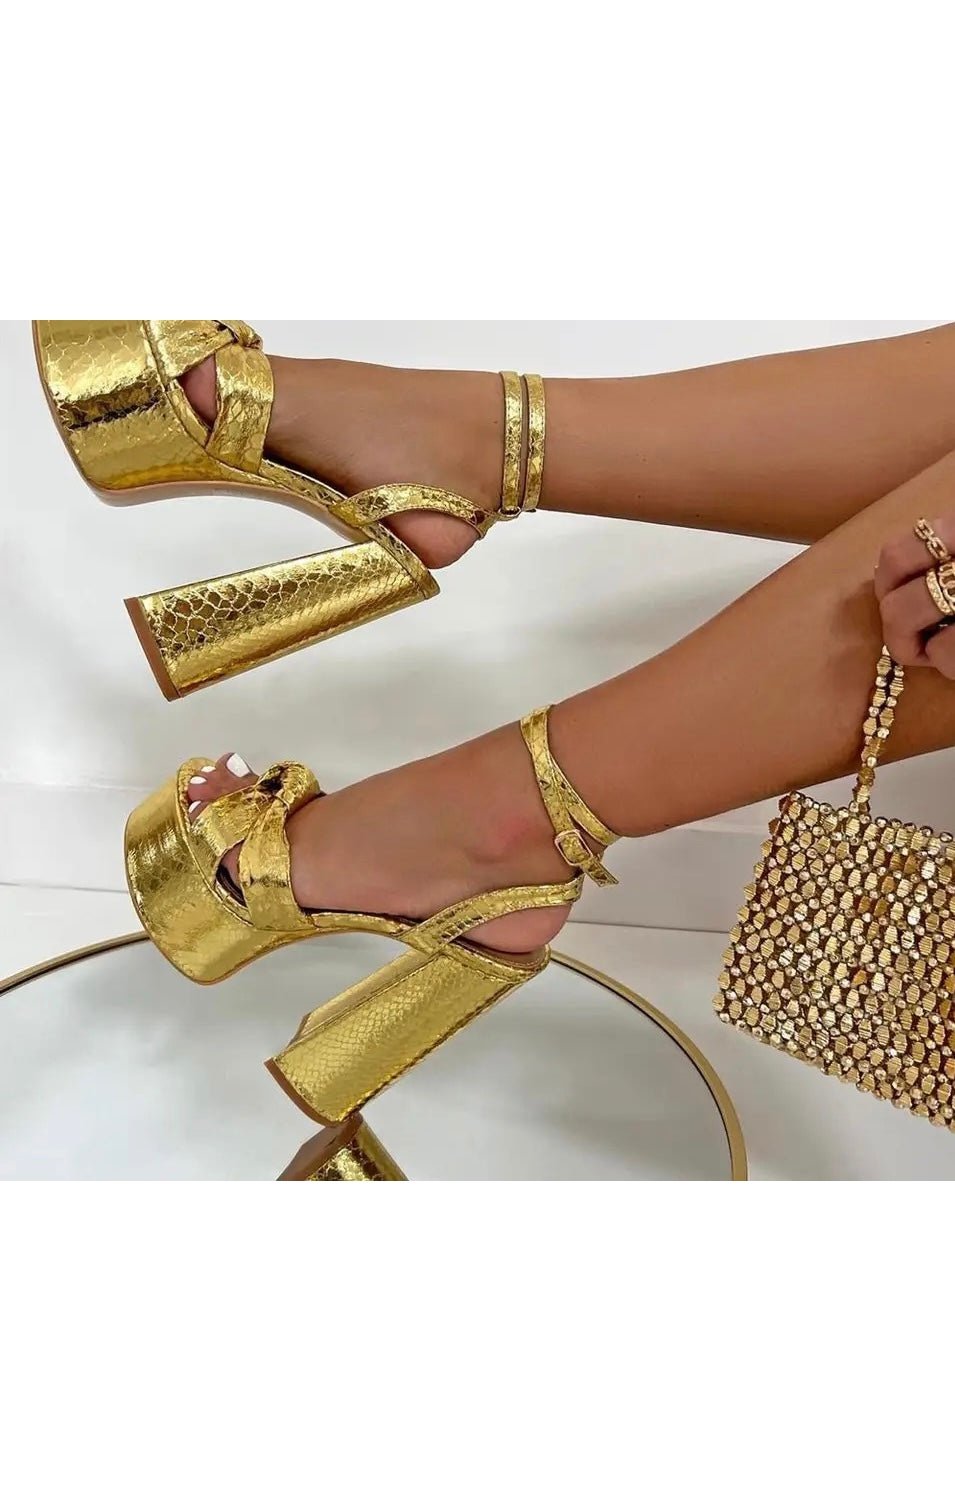 Luxury Sexy Metallic Platform Sandals Heels (Many Colors)